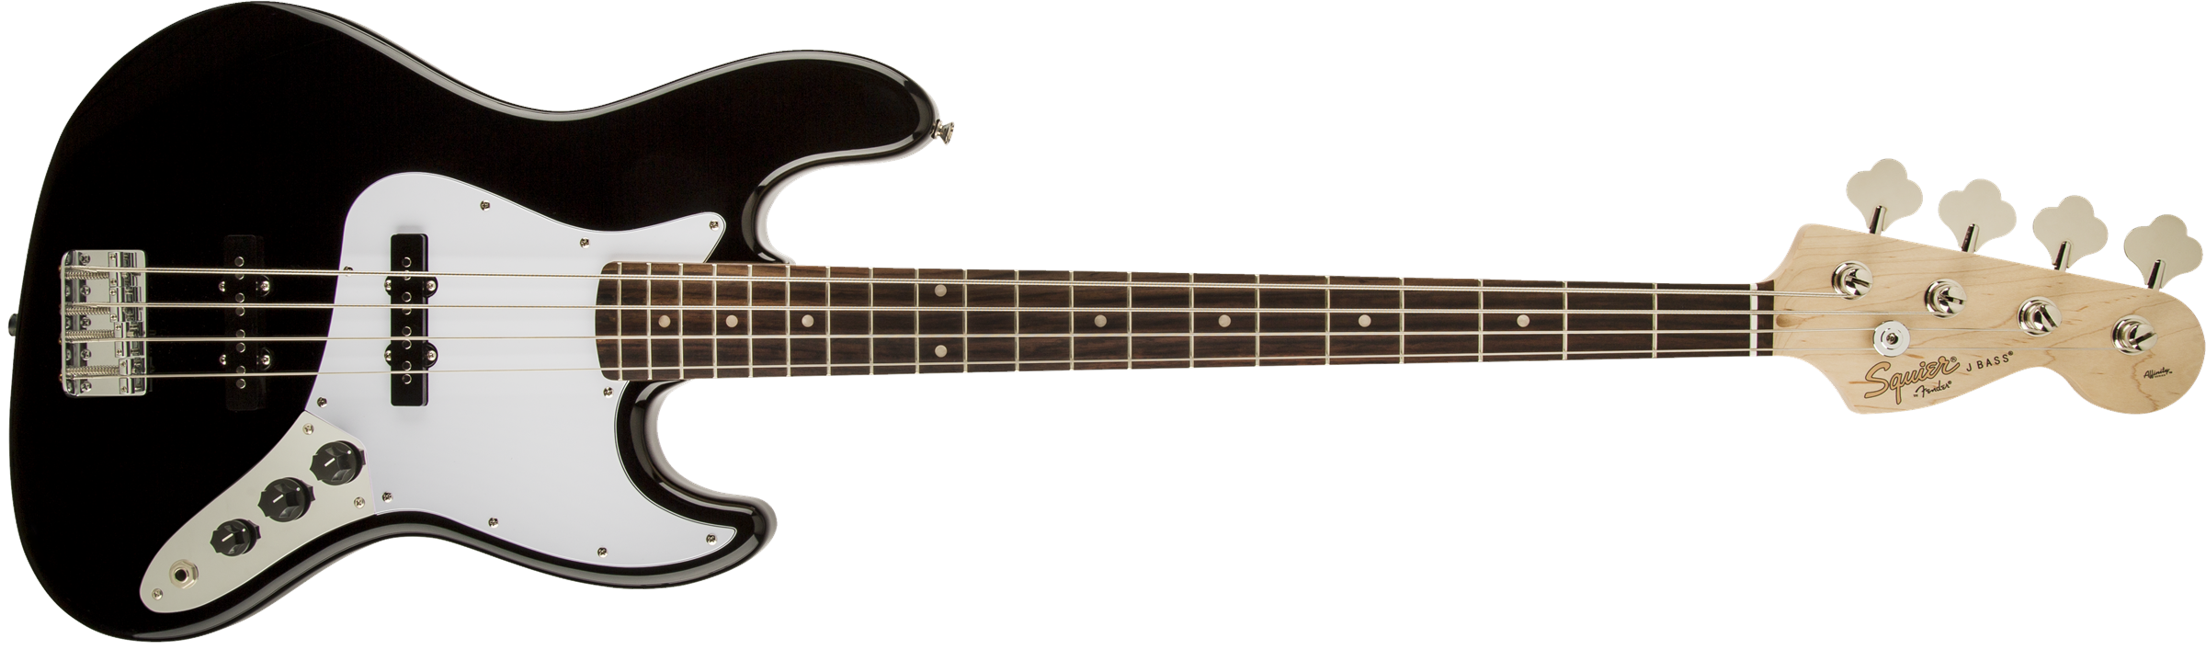 Squier By Fender - Affinity Jazz Bass - Elektrisk Bas (Black)